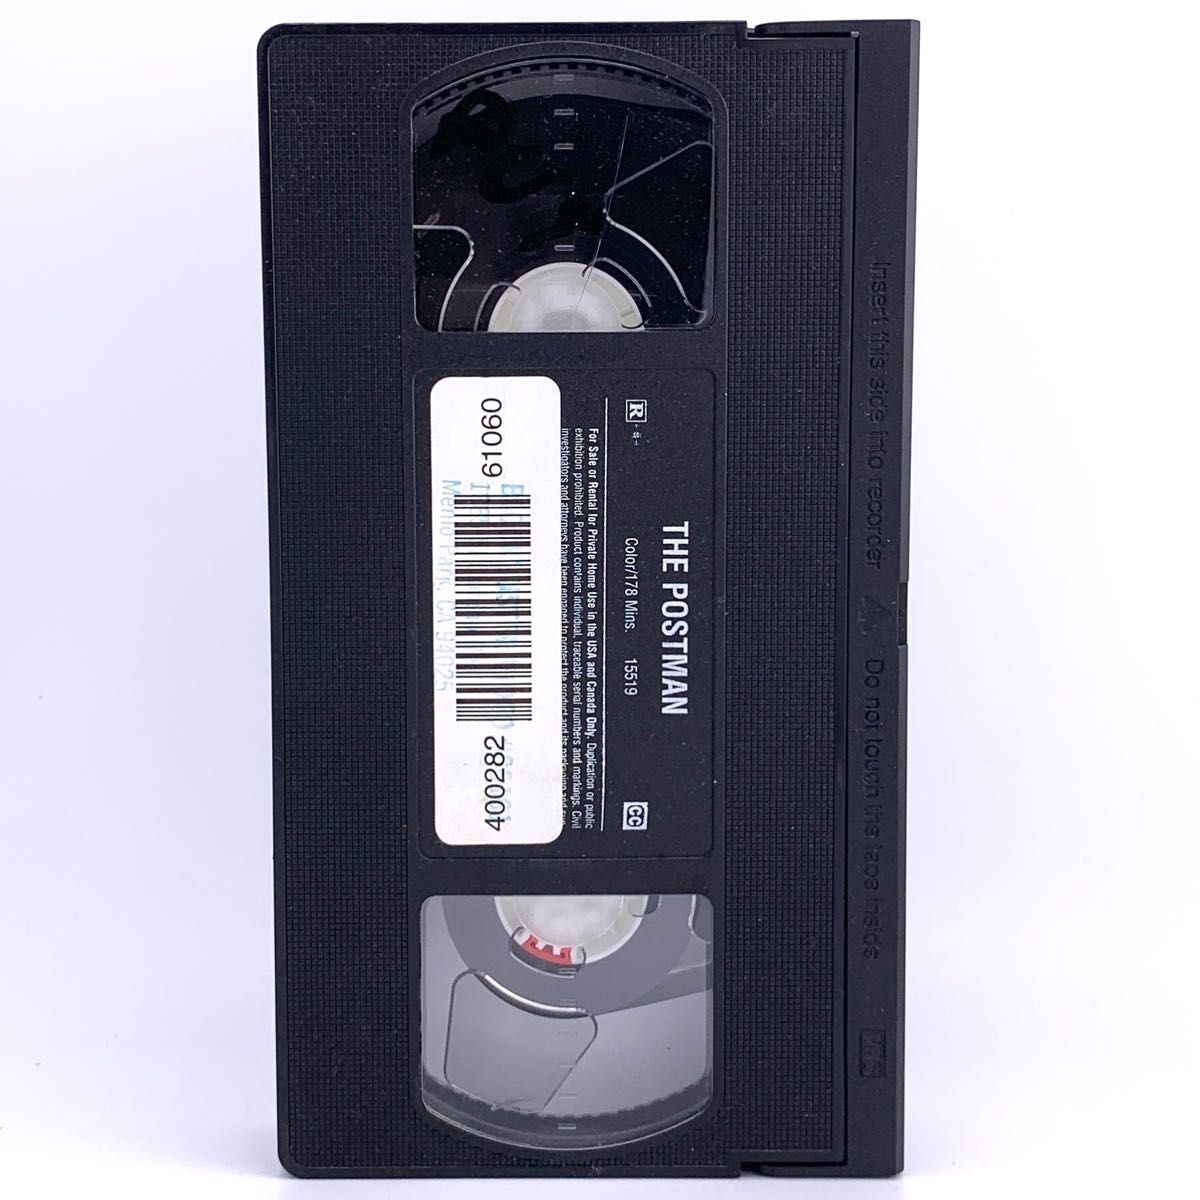 【VHS】The Postman ポストマン 映画 海外 英語 ビデオテープ 主演 ケビン・コスナー